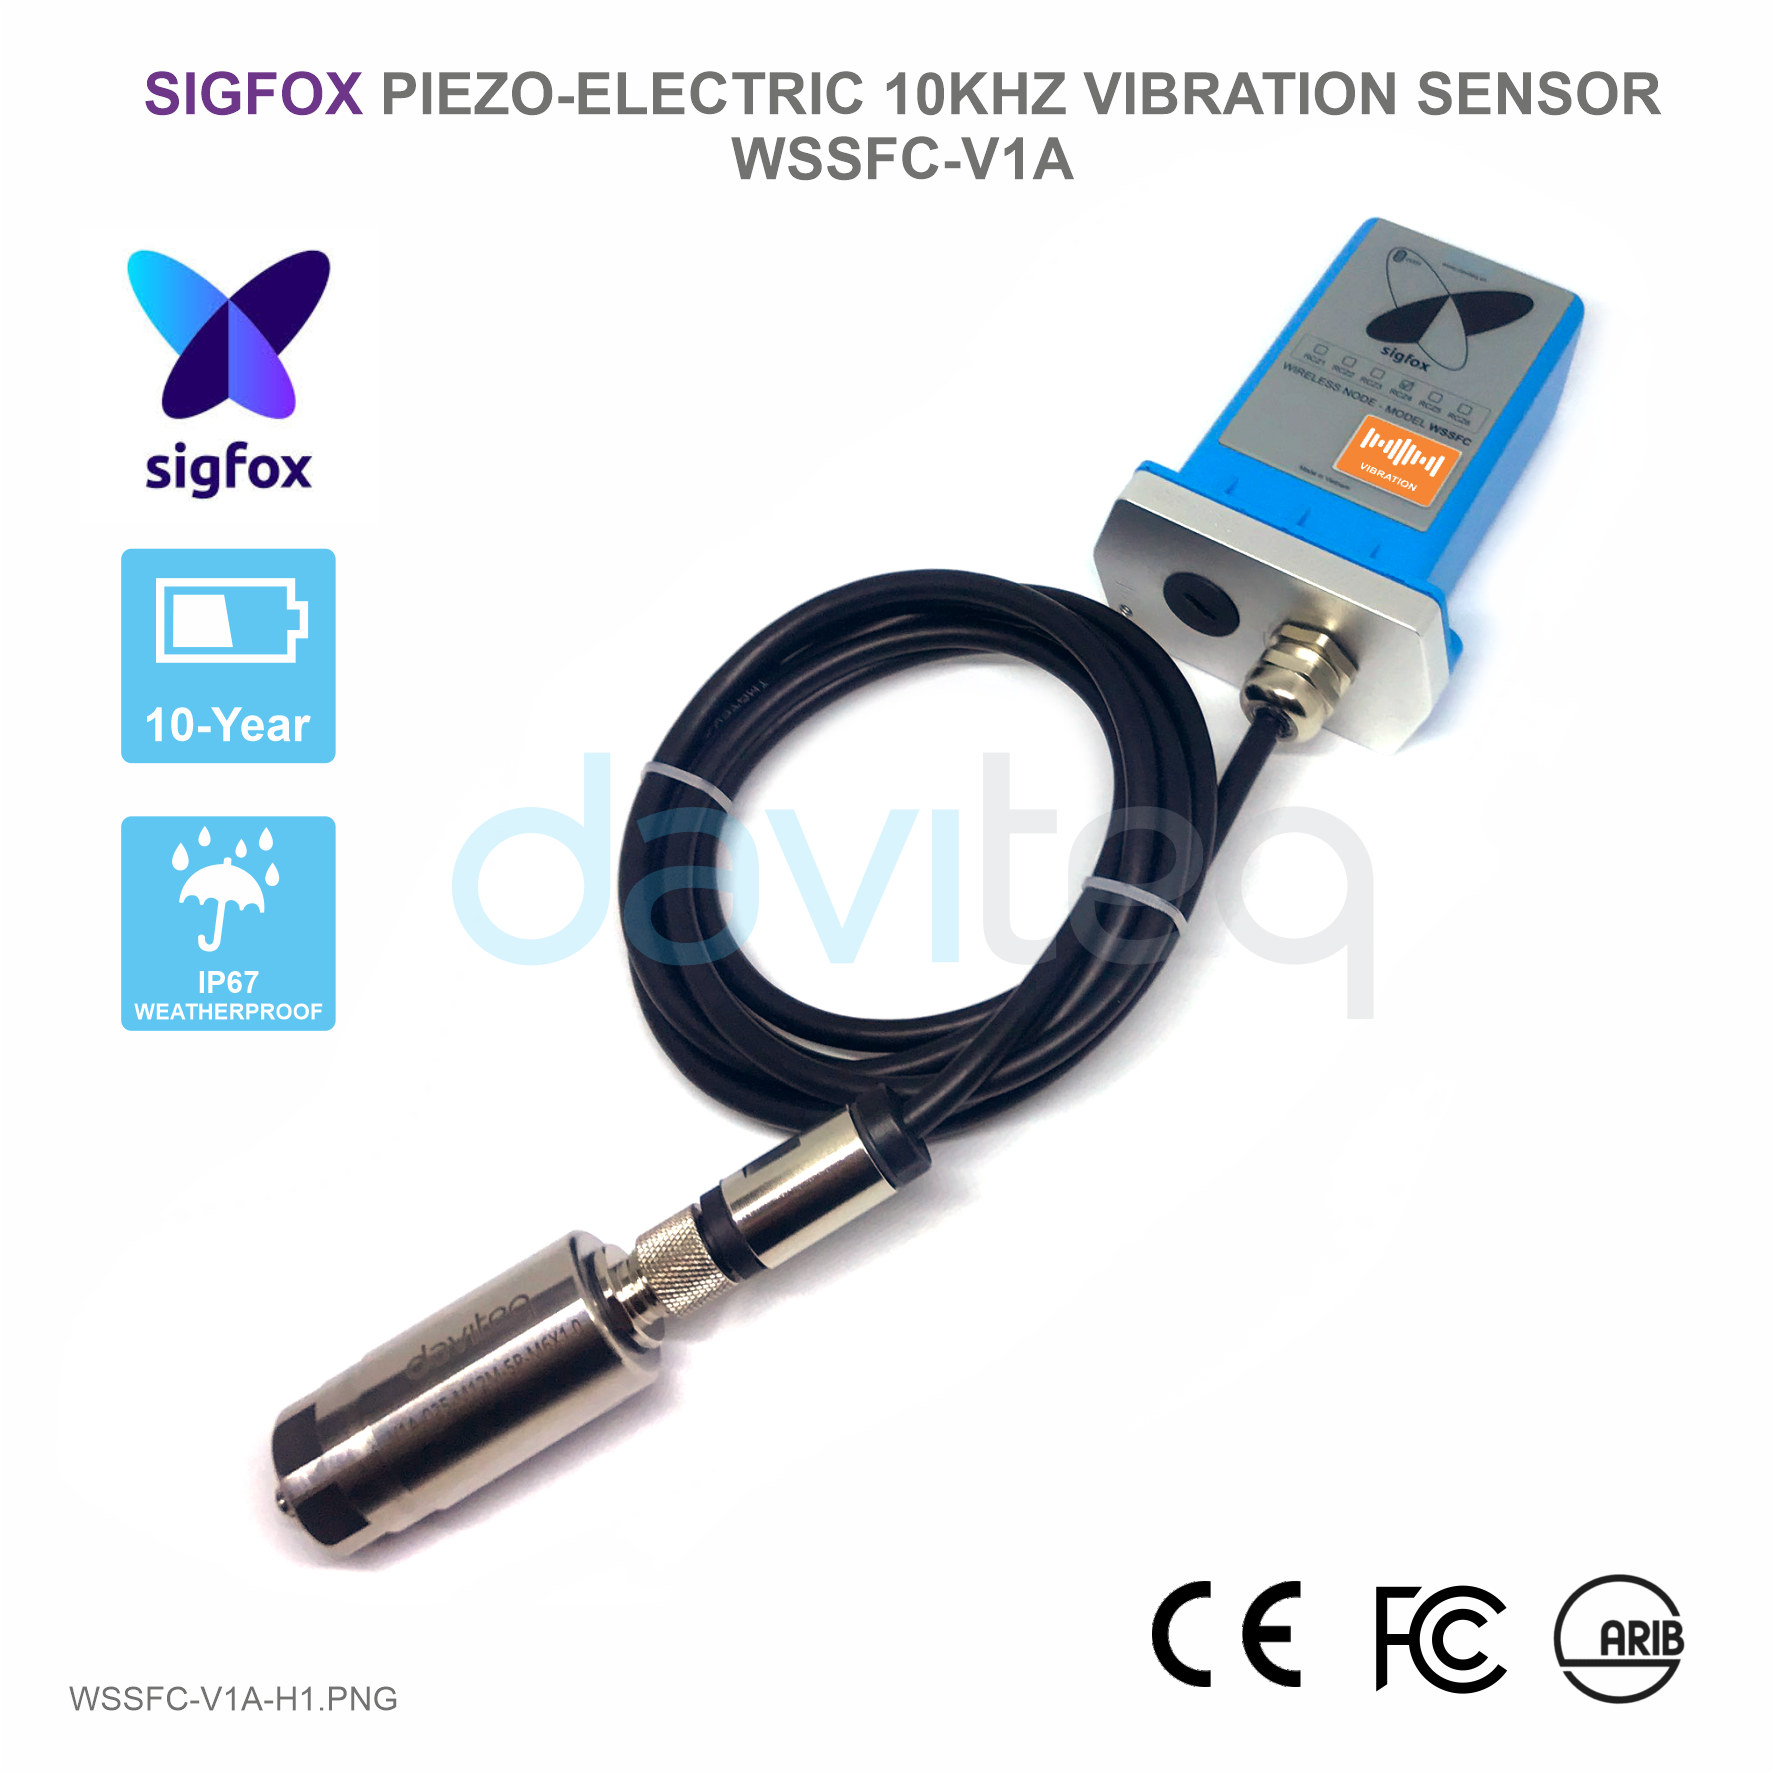 Sigfox Piezo-Electric 10KHz Vibration Sensor